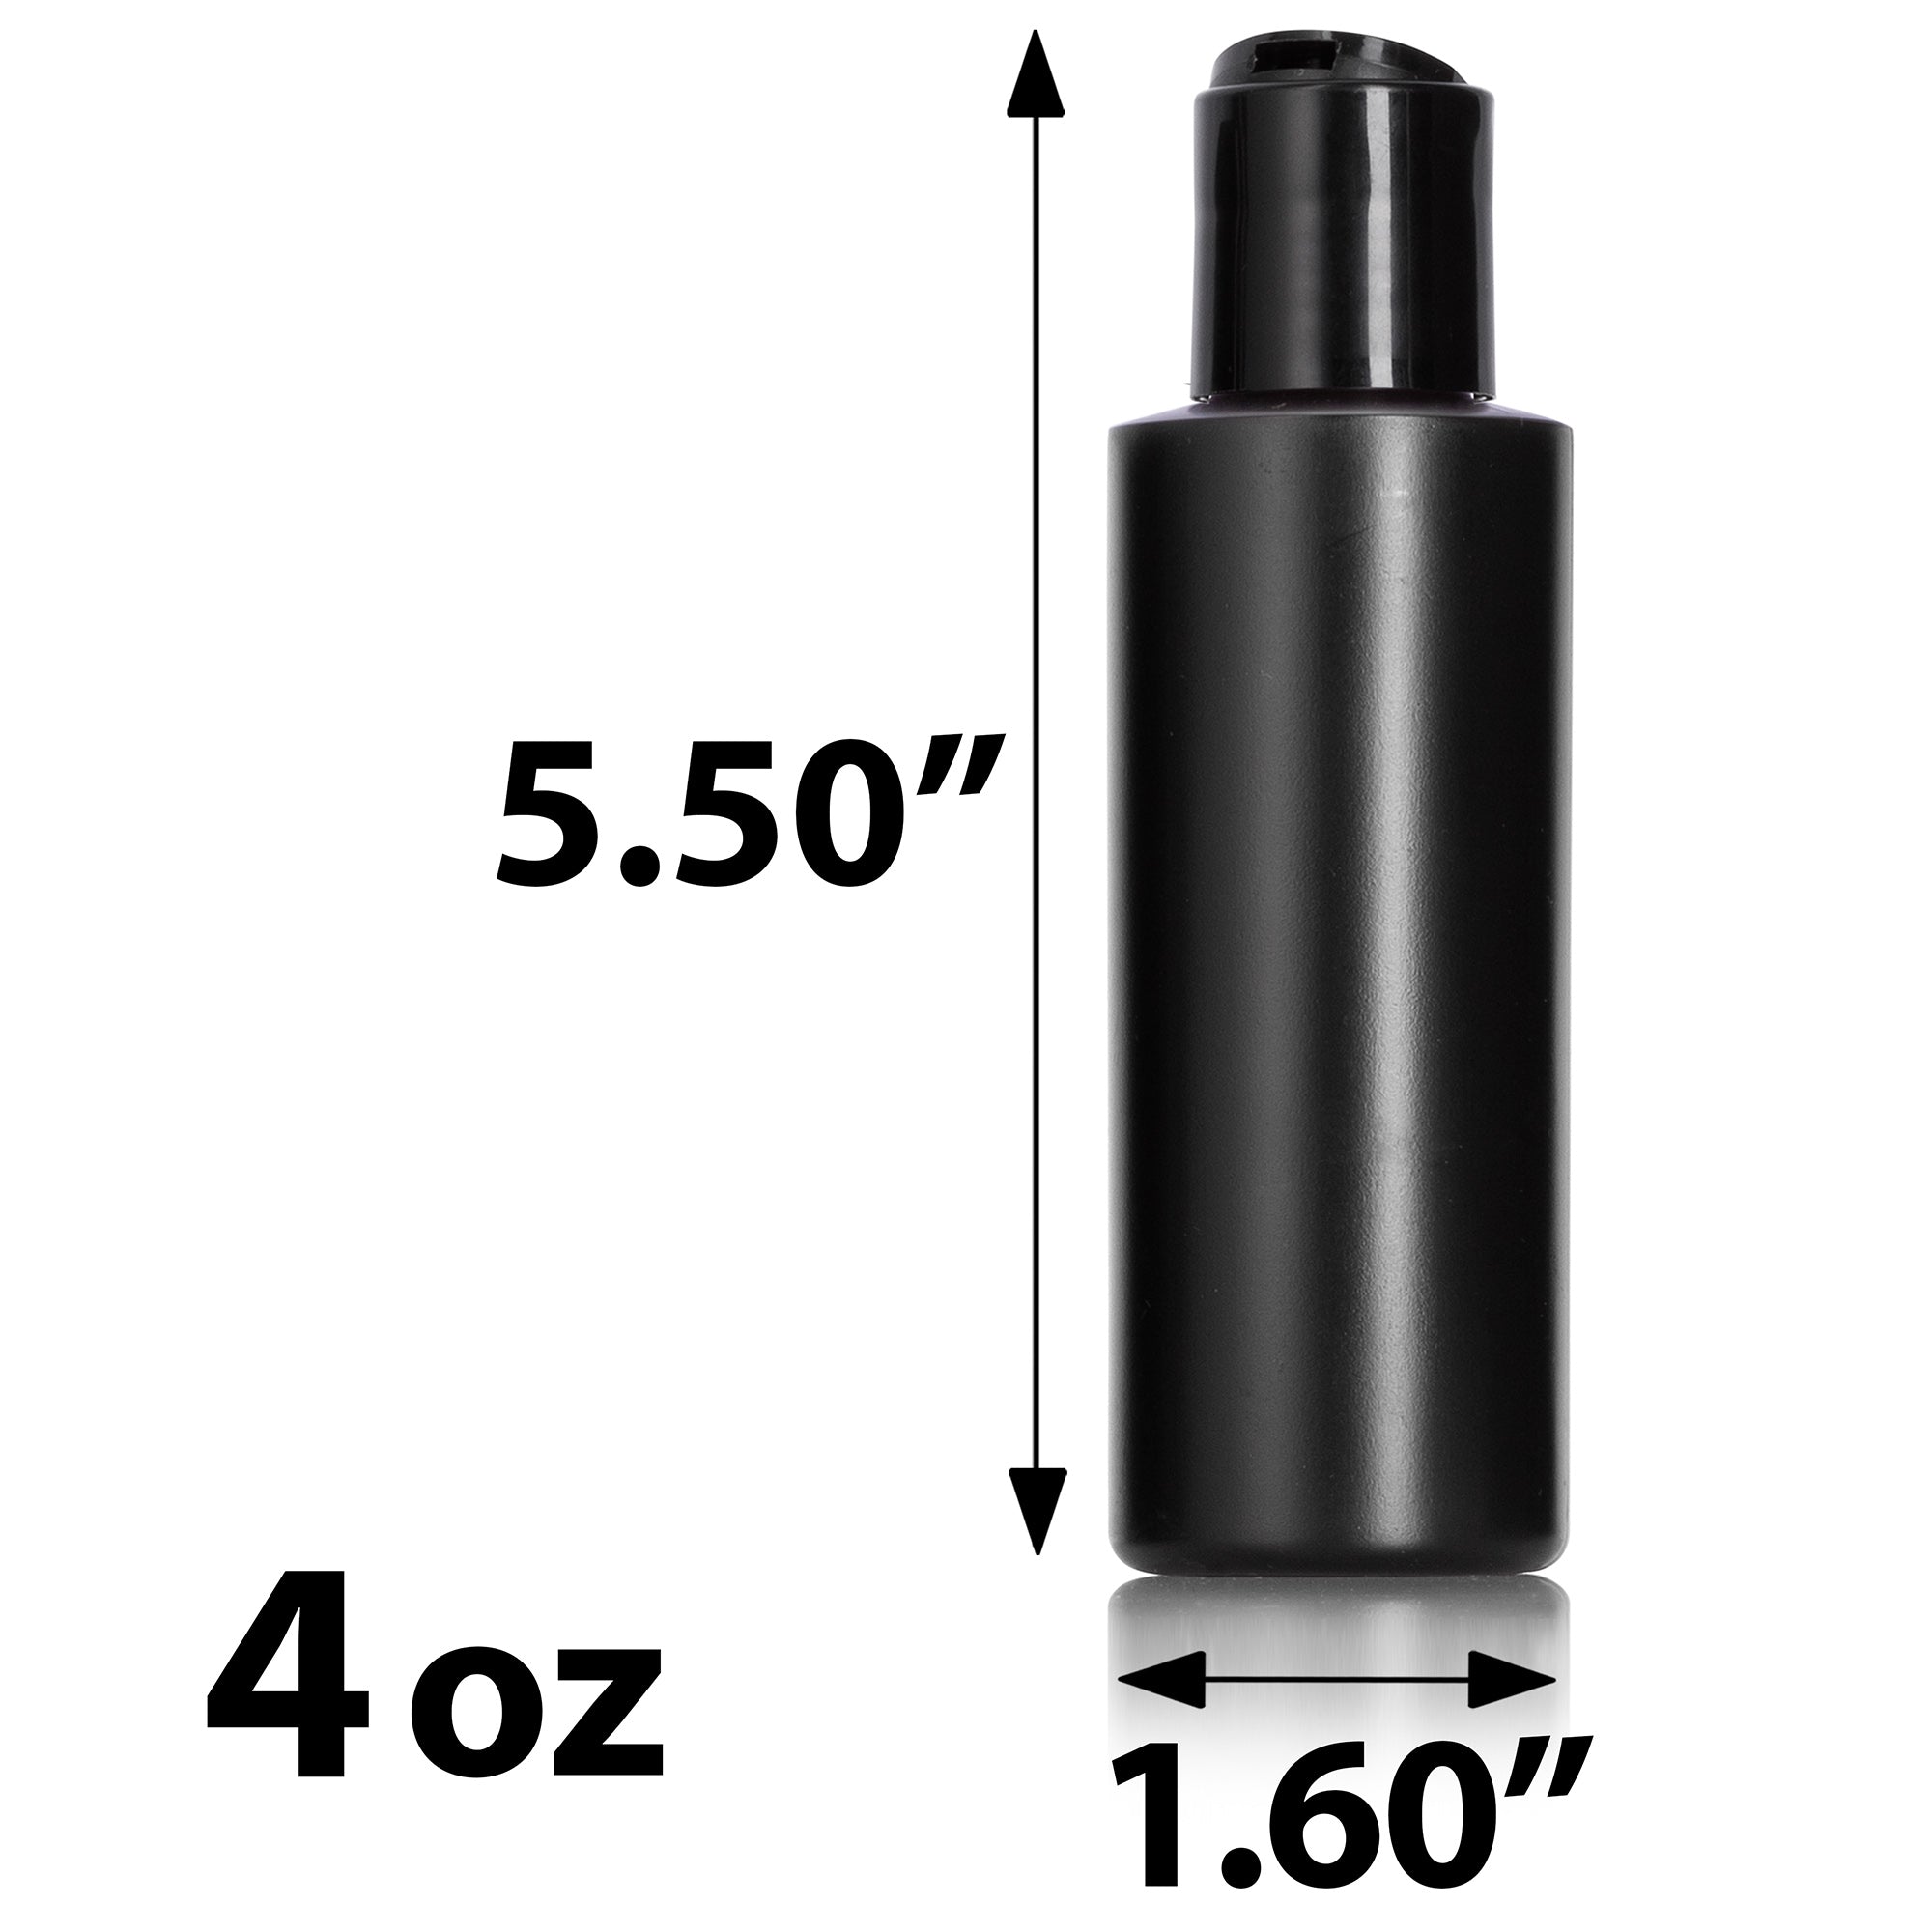 1gal Black HDPE Plastic 50ml Buckets (EZ Lid) - Black